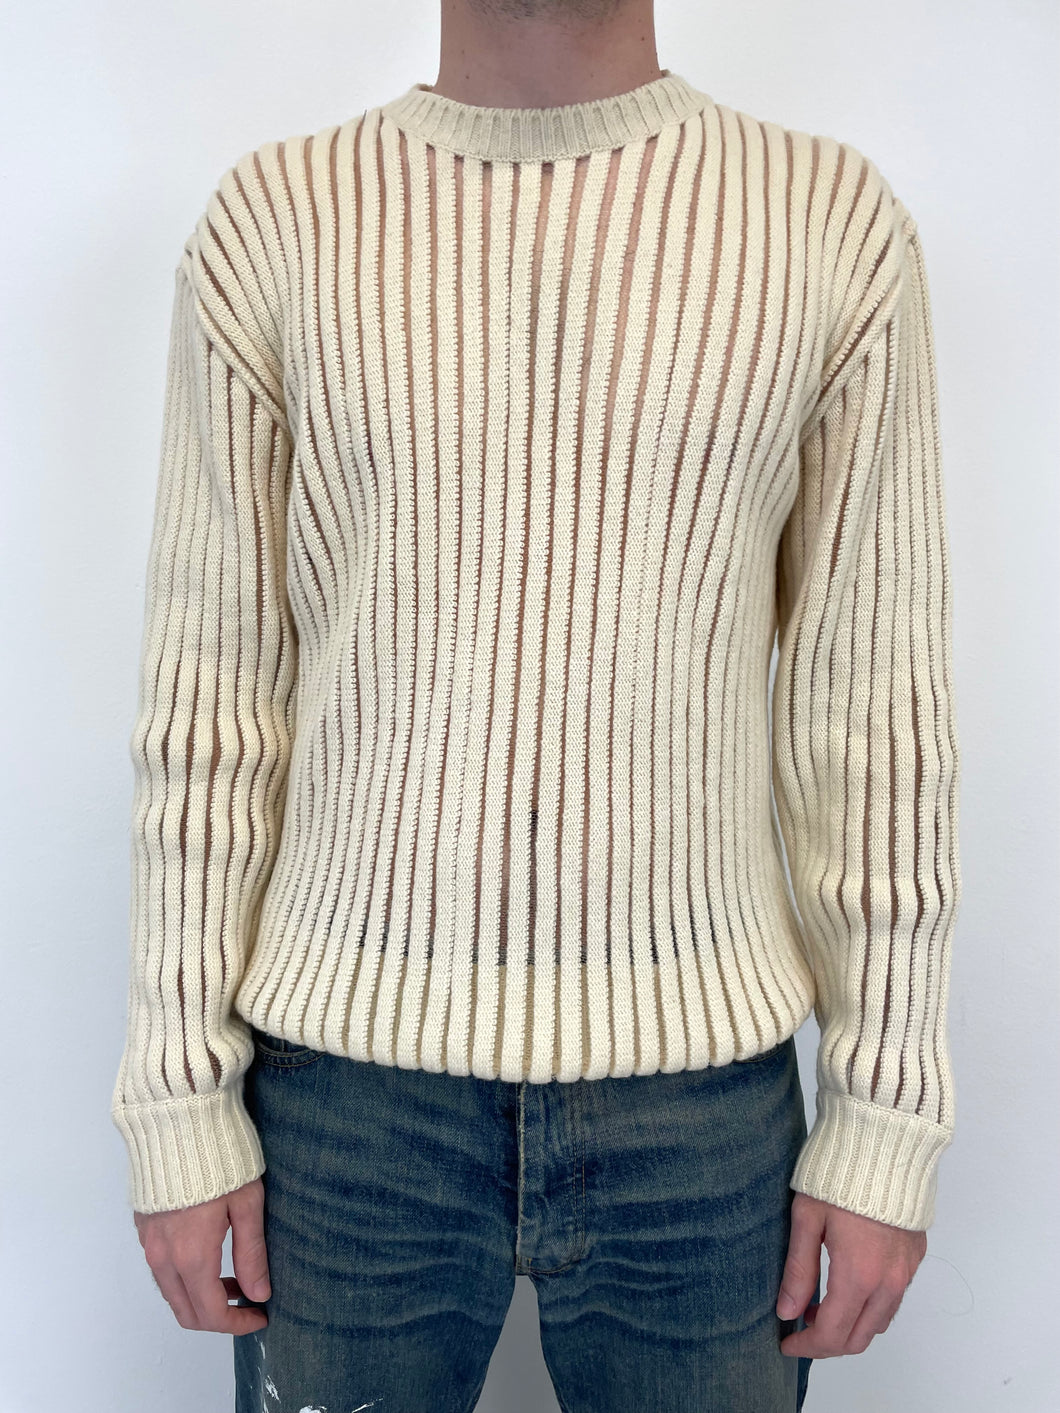 1998 Helmut Lang semi transparent sweater